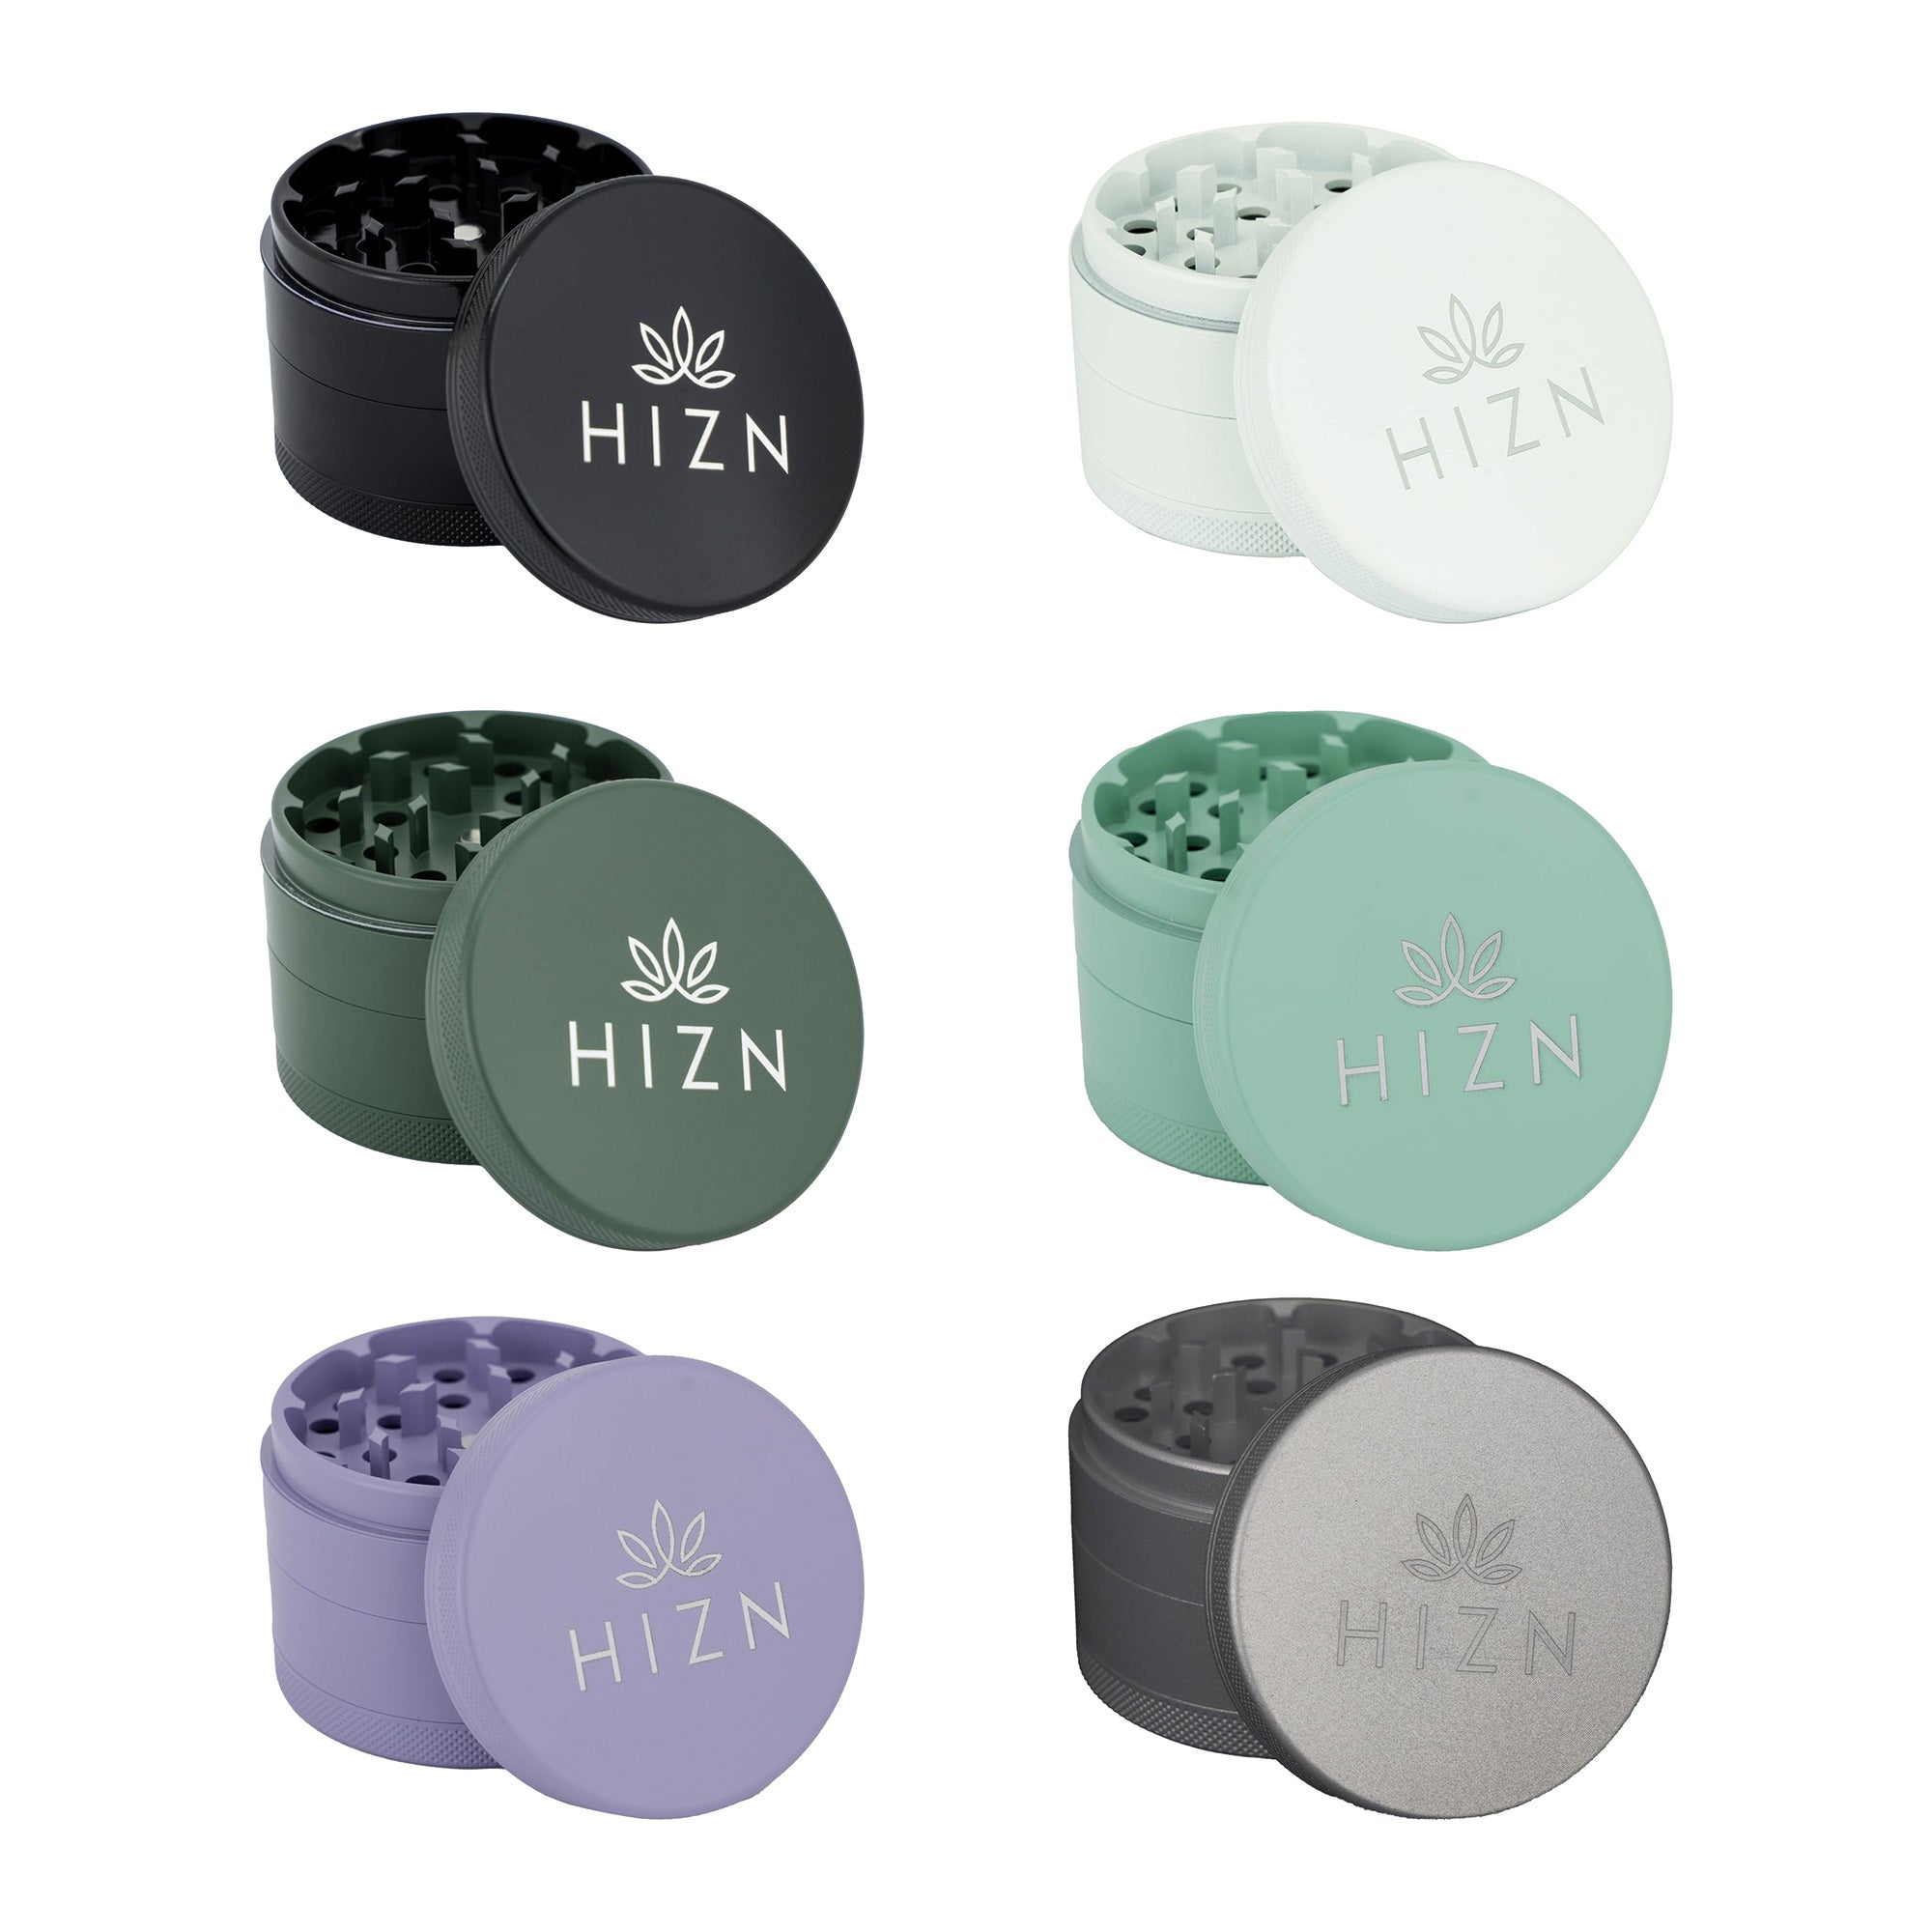 HIZEN Keramik Grinder 63mm Sammlung: Schwarz, Weiß, Grün, Mint, Lila, Grau